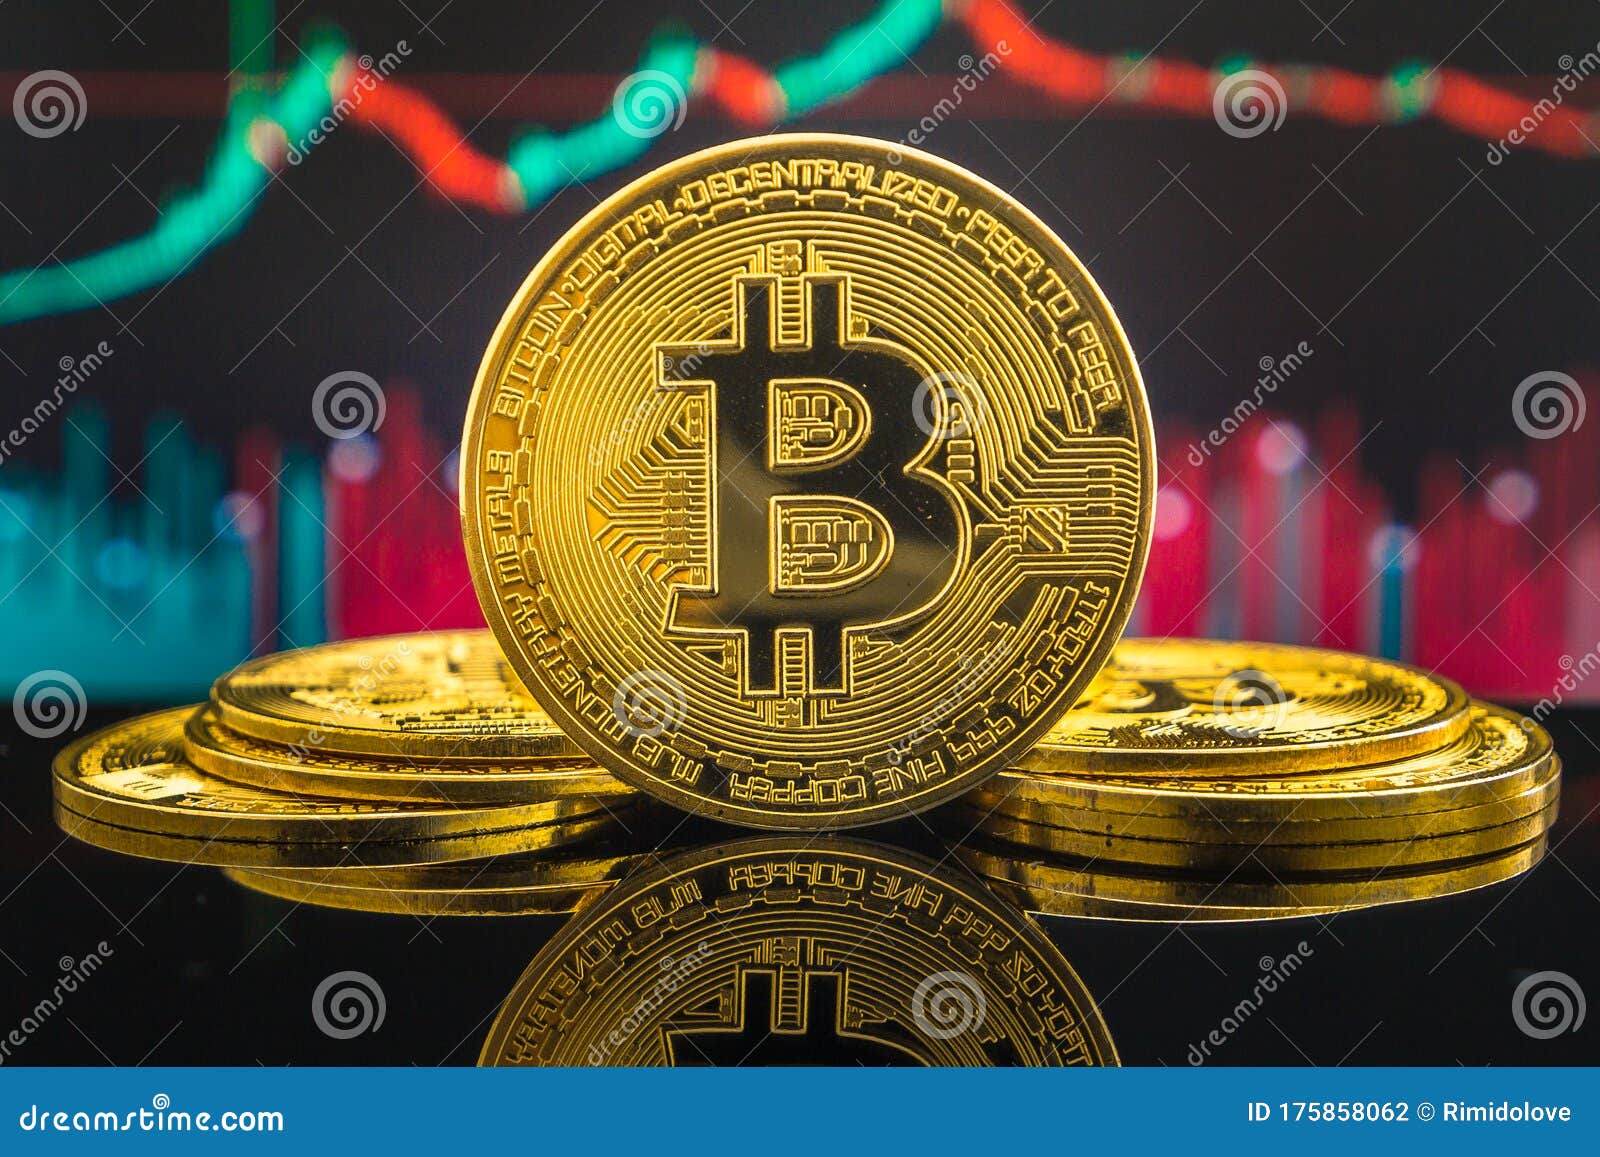 exchange rate bitocin bitcoin gold